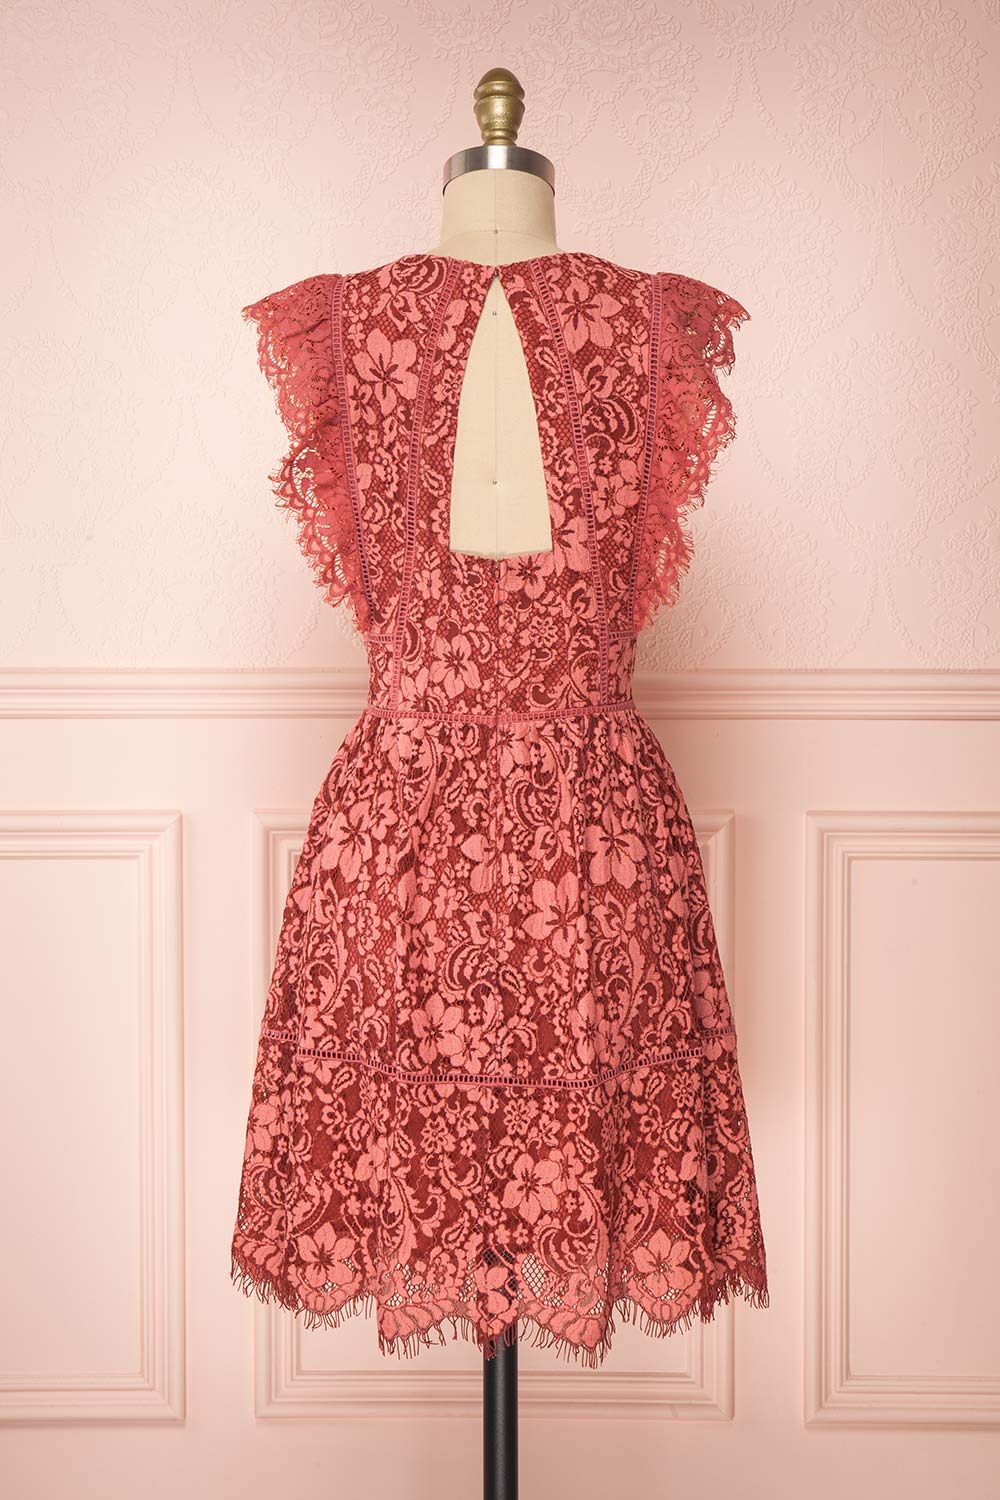 Erdem Margot Red Lace inspired formal dress - Sew Tessuti Blog